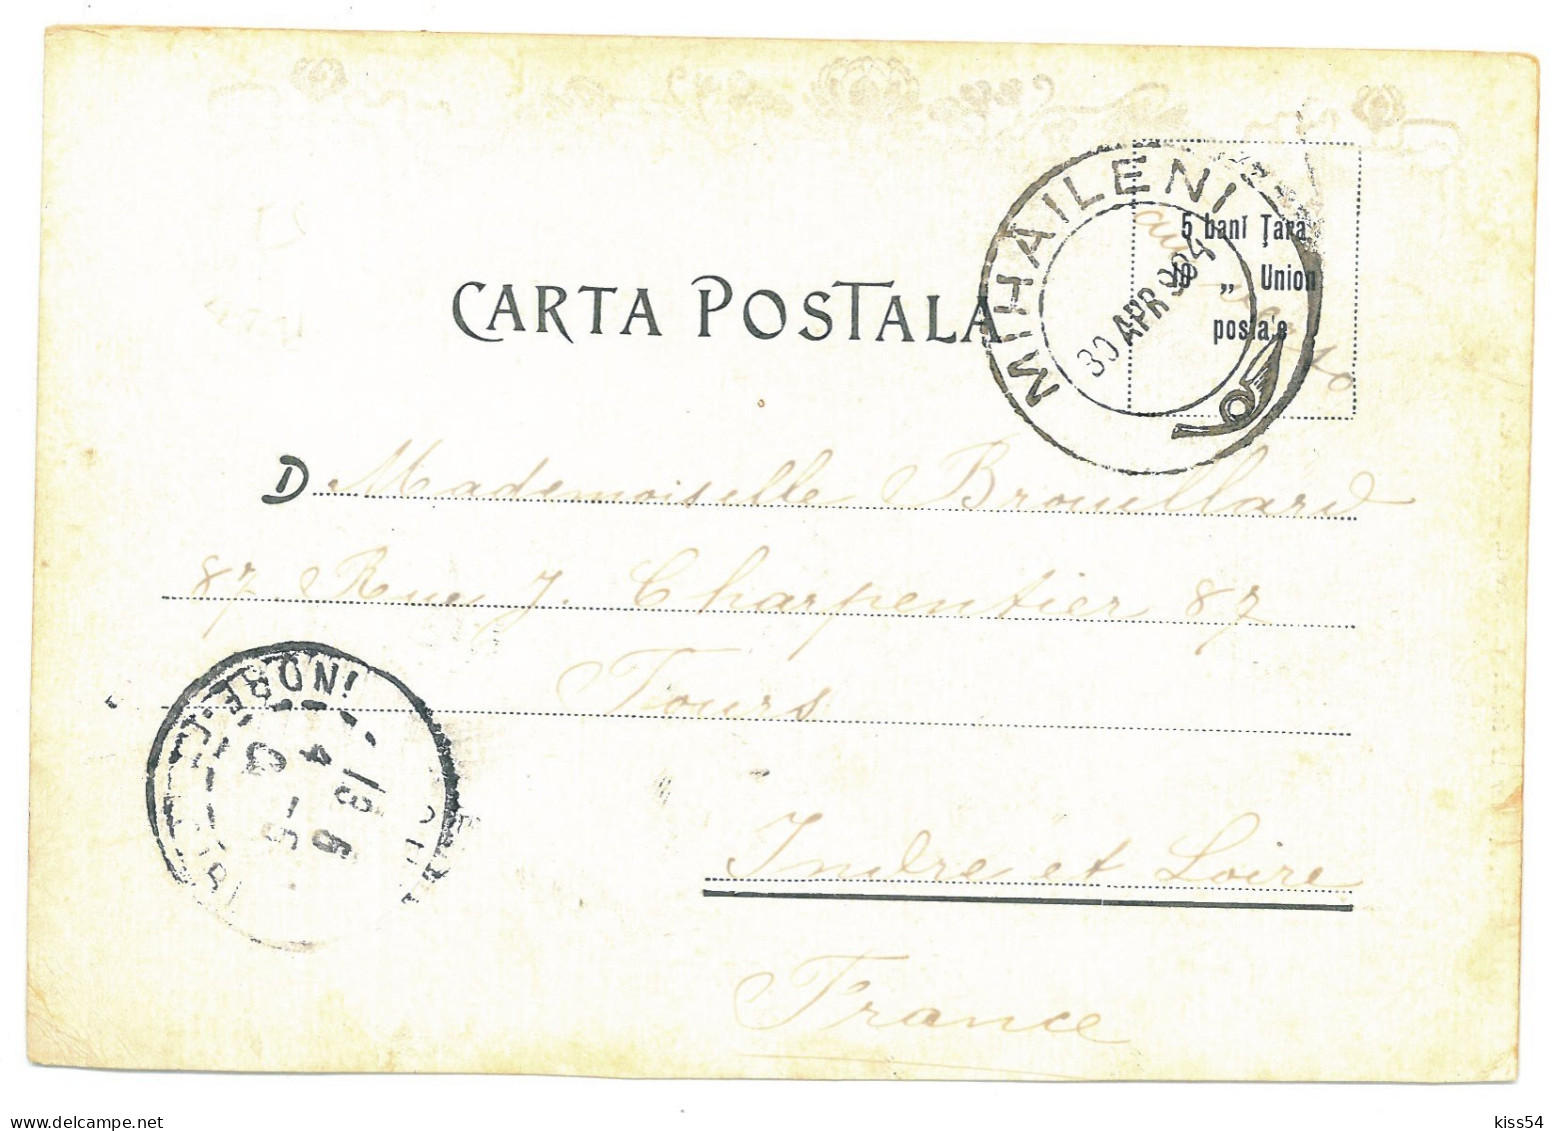 RO 38 - 20635 BUCURESTI, Atheneum, Music, Romania - Old Postcard - Used - 1904 - Roumanie